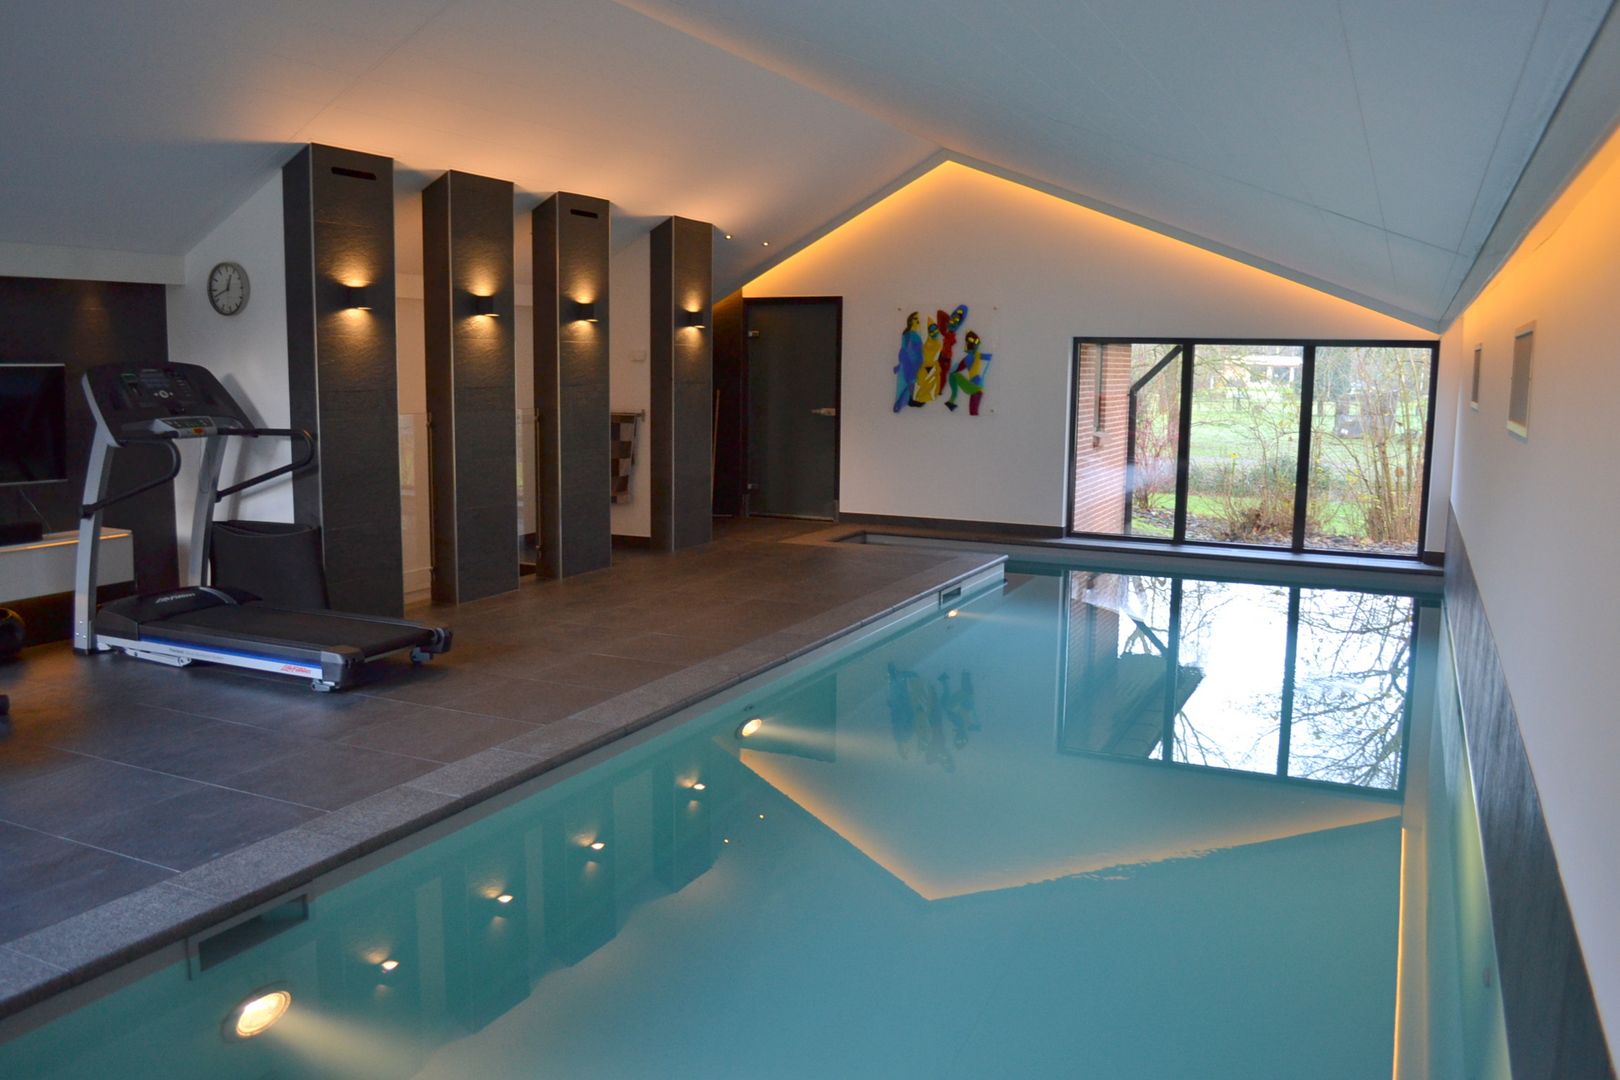 Pool, RON Stappenbelt, Interiordesign RON Stappenbelt, Interiordesign Modern Havuz